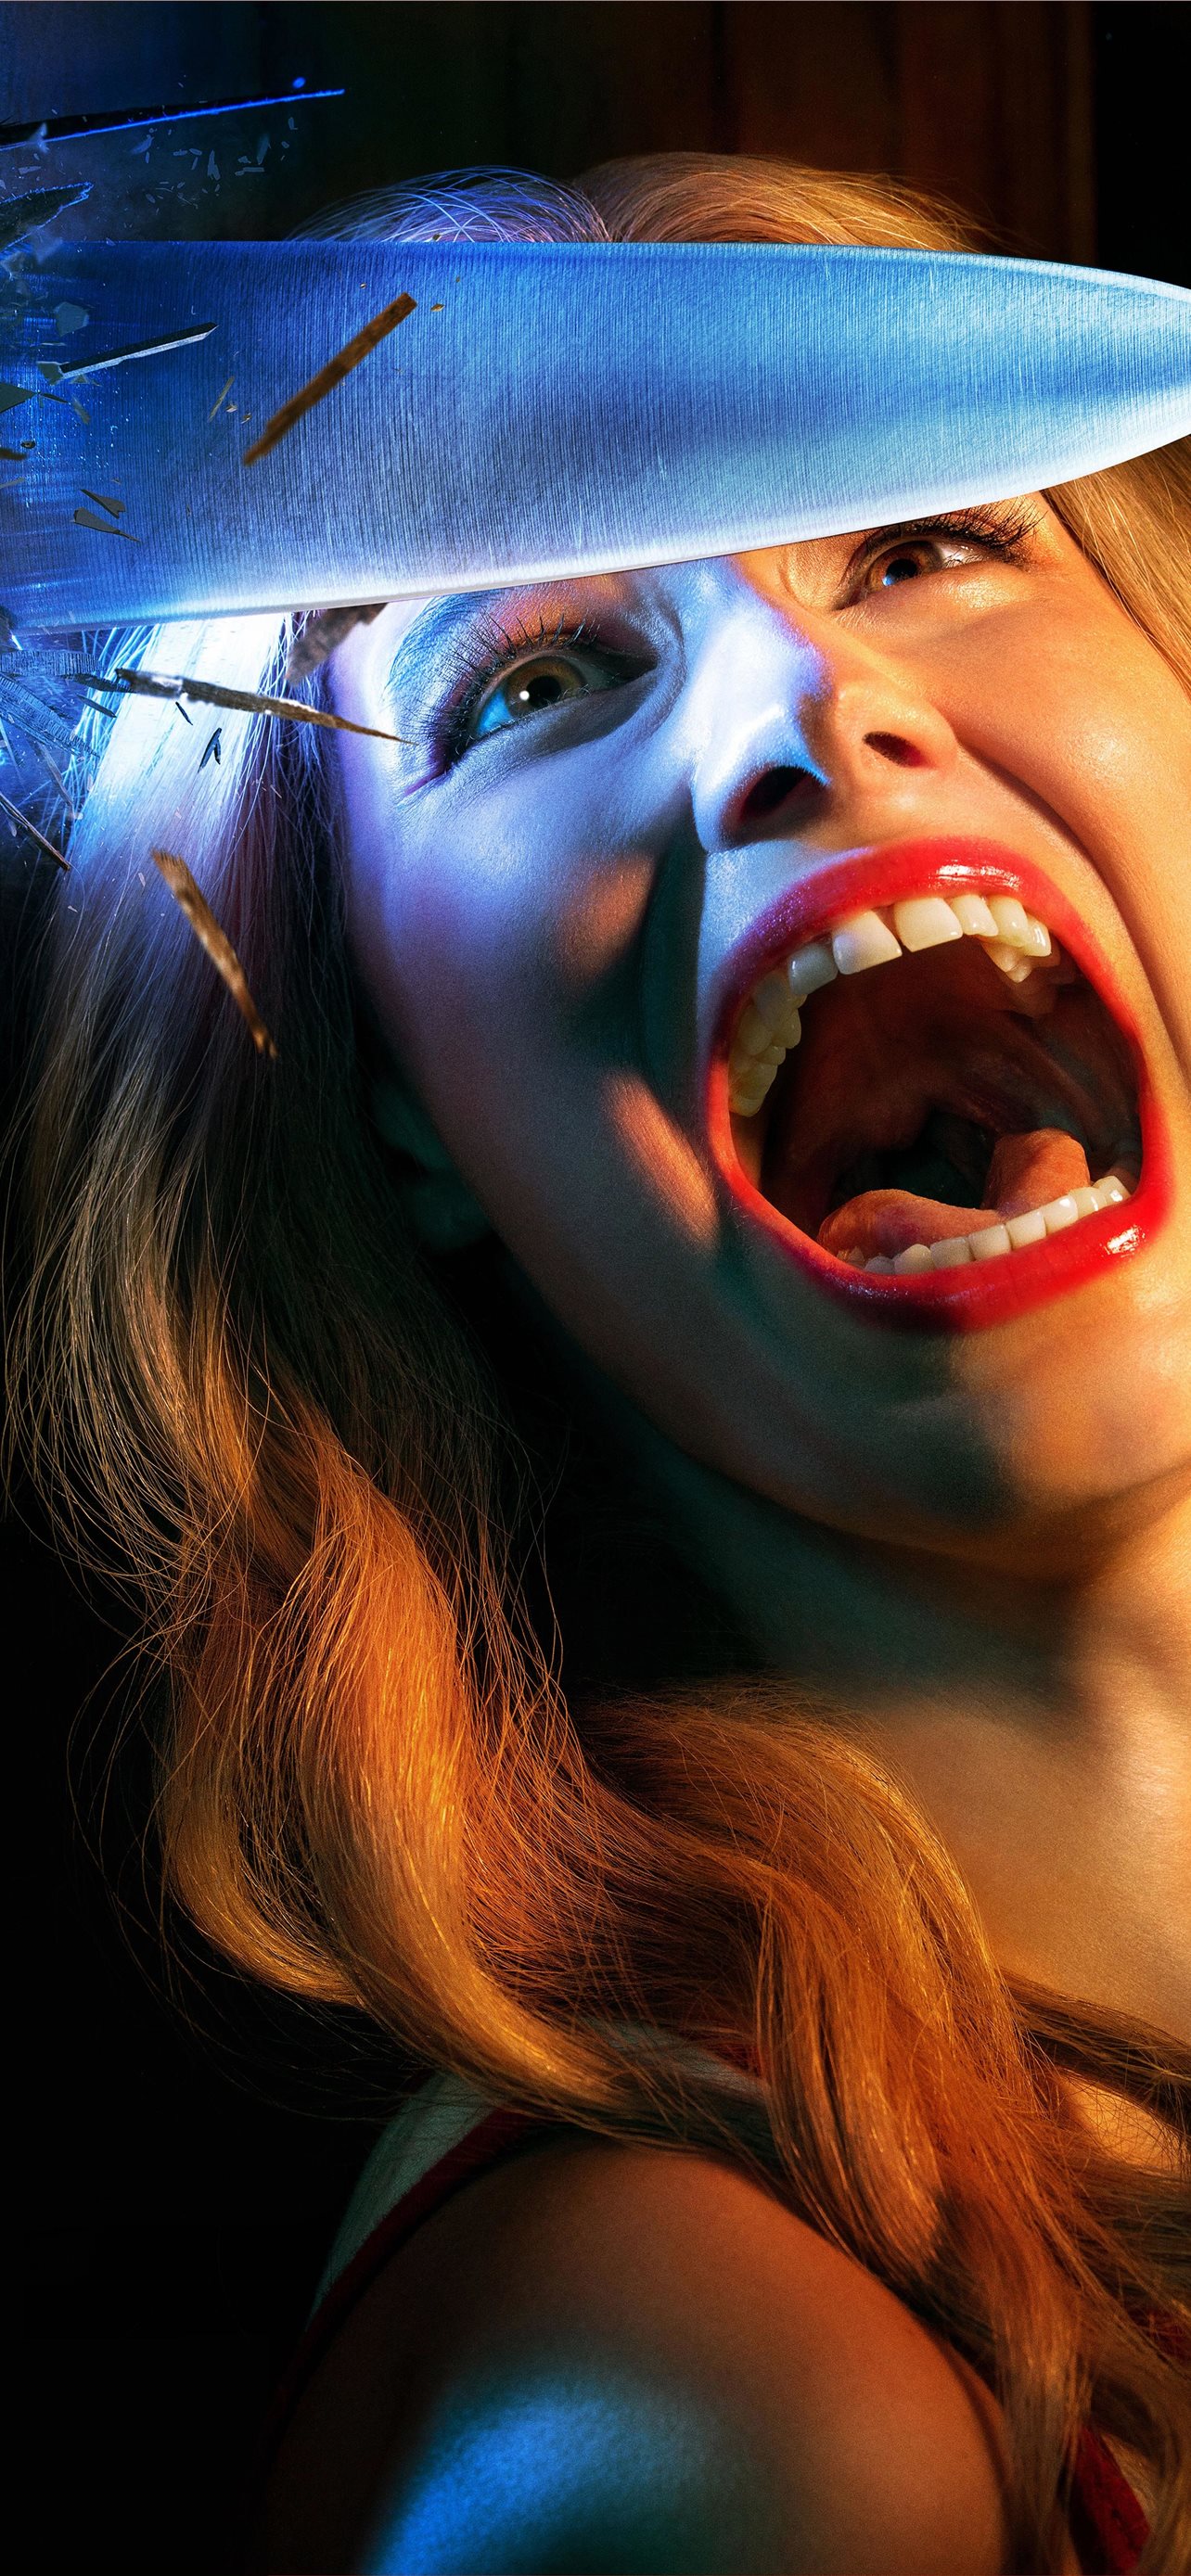 2,000+ Best Horror Photos · 100% Free Download · Pexels Stock Photos